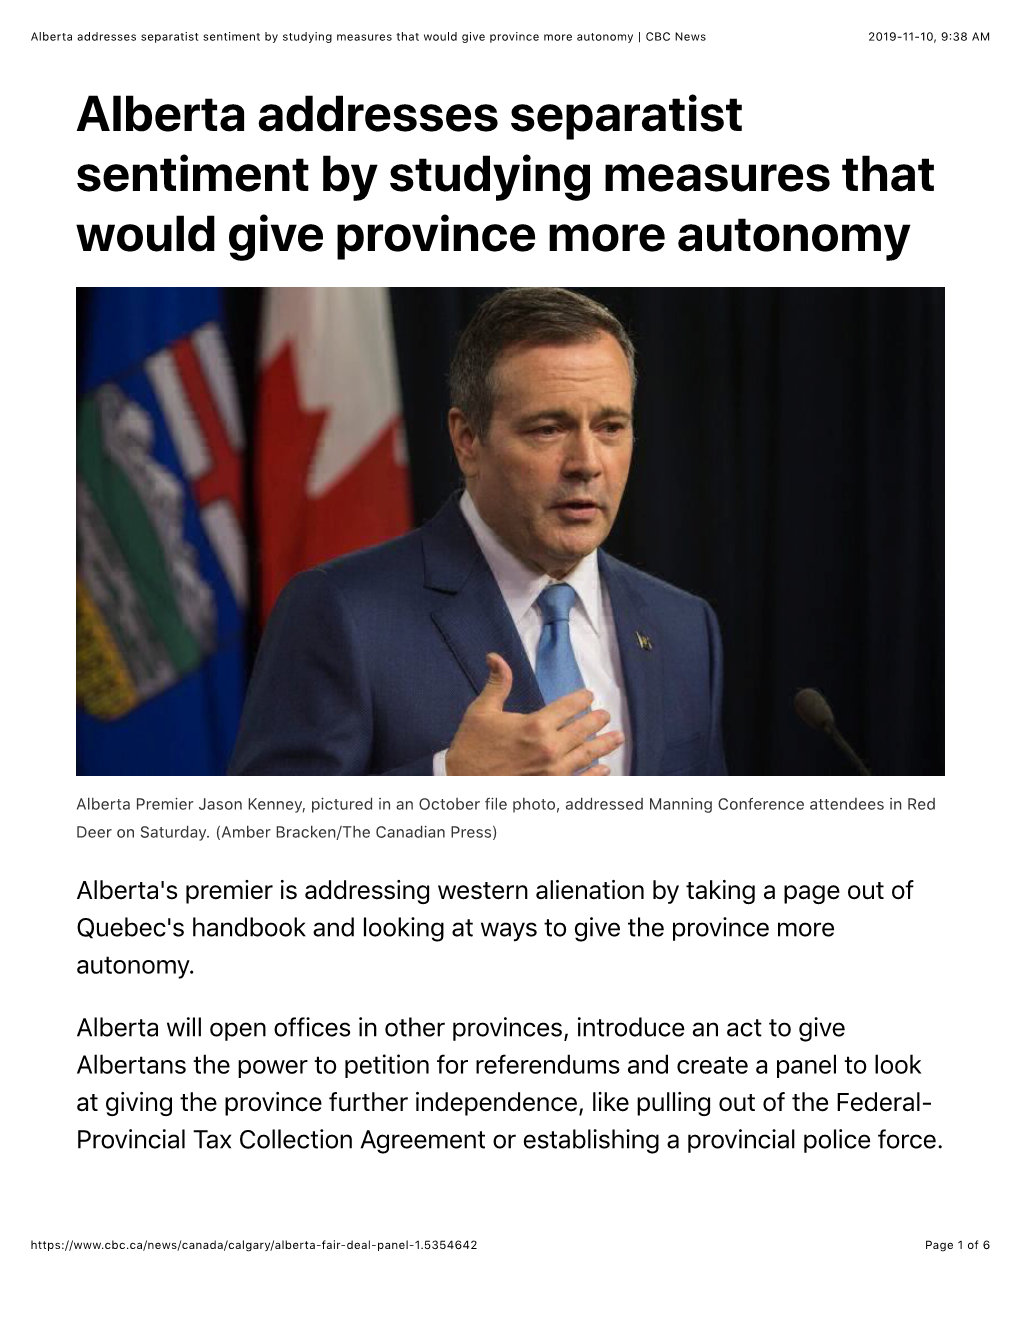 Alberta Addresses Separatist Sentiment by Studying